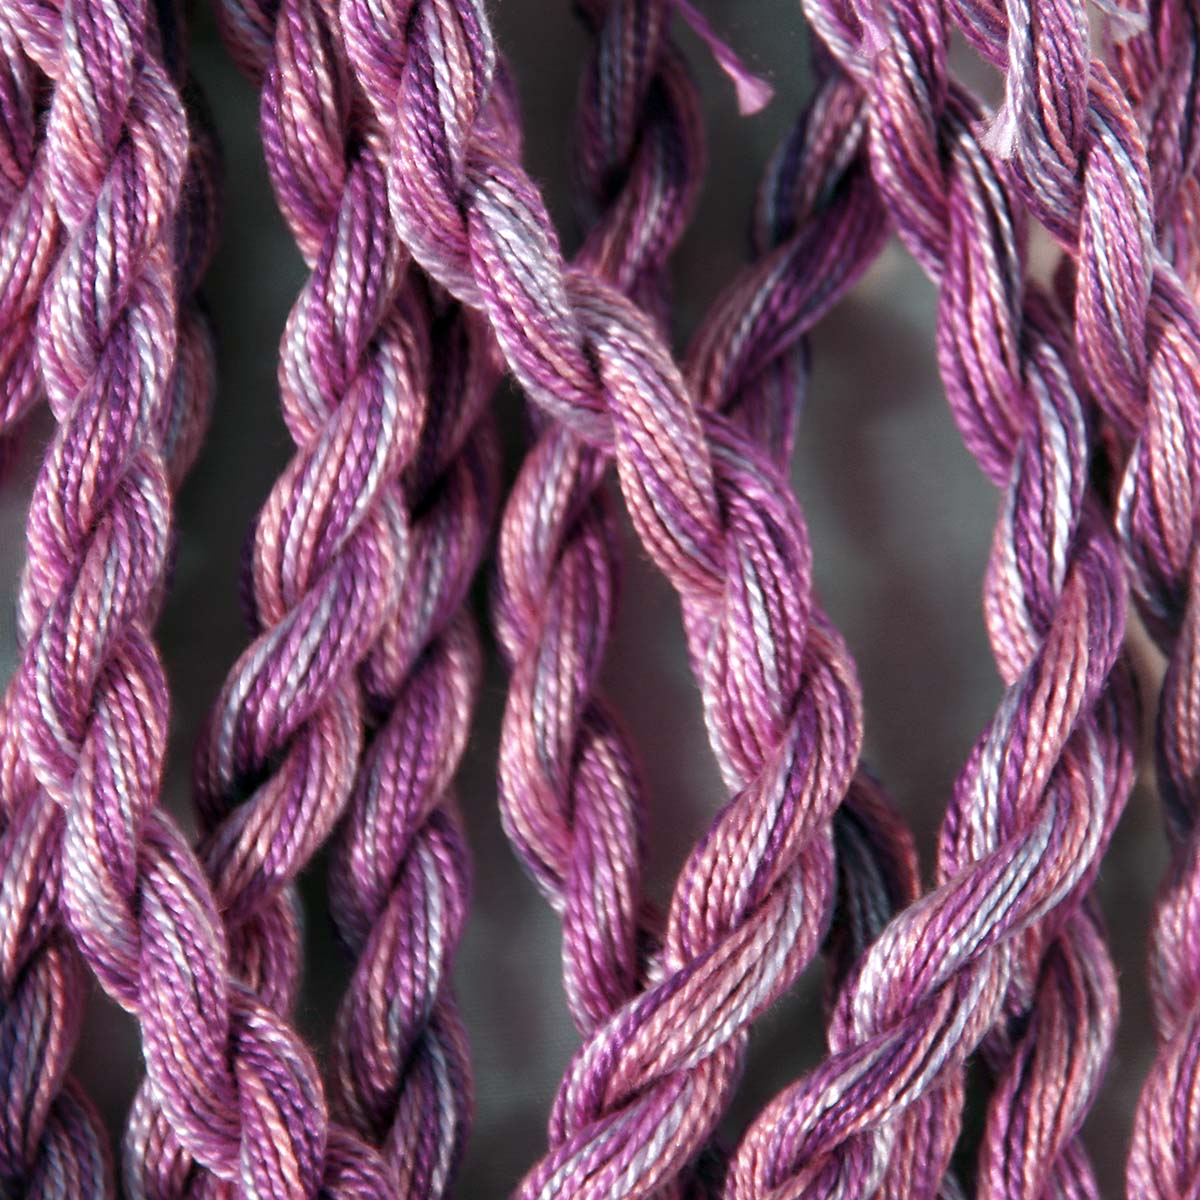 www.colourstreams.com.au Colour Streams Hand Dyed Swww.colourstreams.com.au Colour Streams Hand Dyed Cotton Threads Cotto Strands Slow Stitch Embroidery Textile Arts Fibre DL 7 Fuschia Purples Pinks